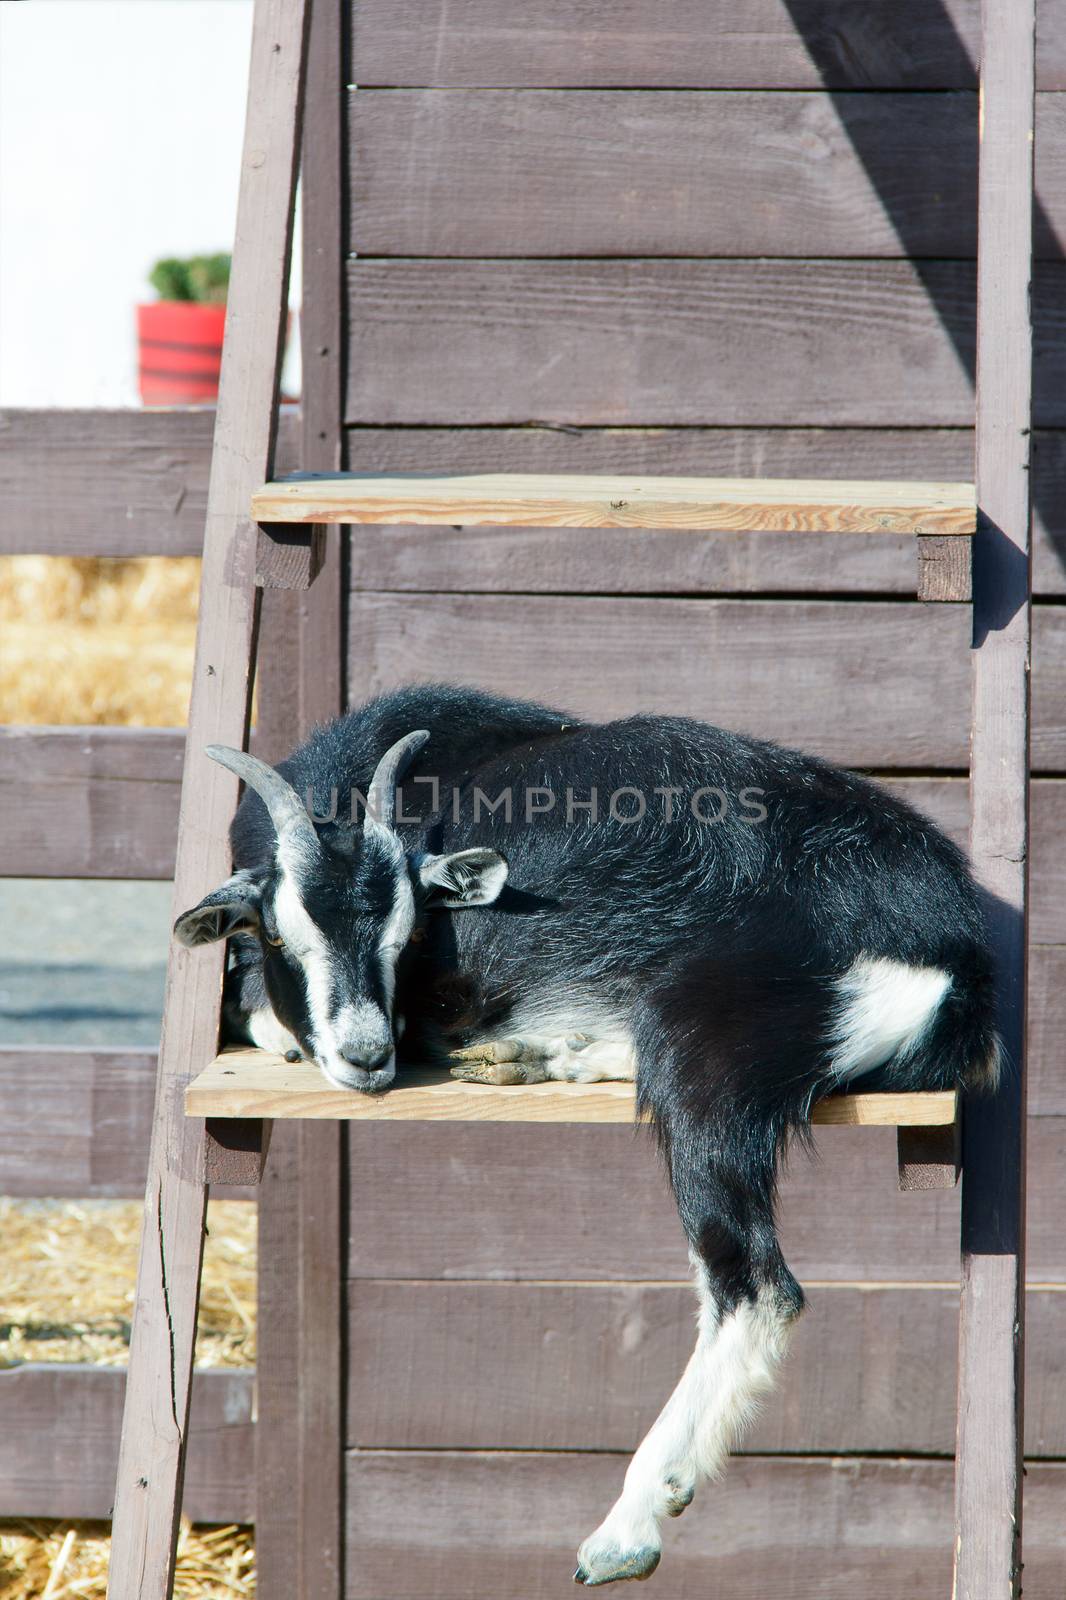 the goat climbed the ladder on the farm. photo by Irinavk